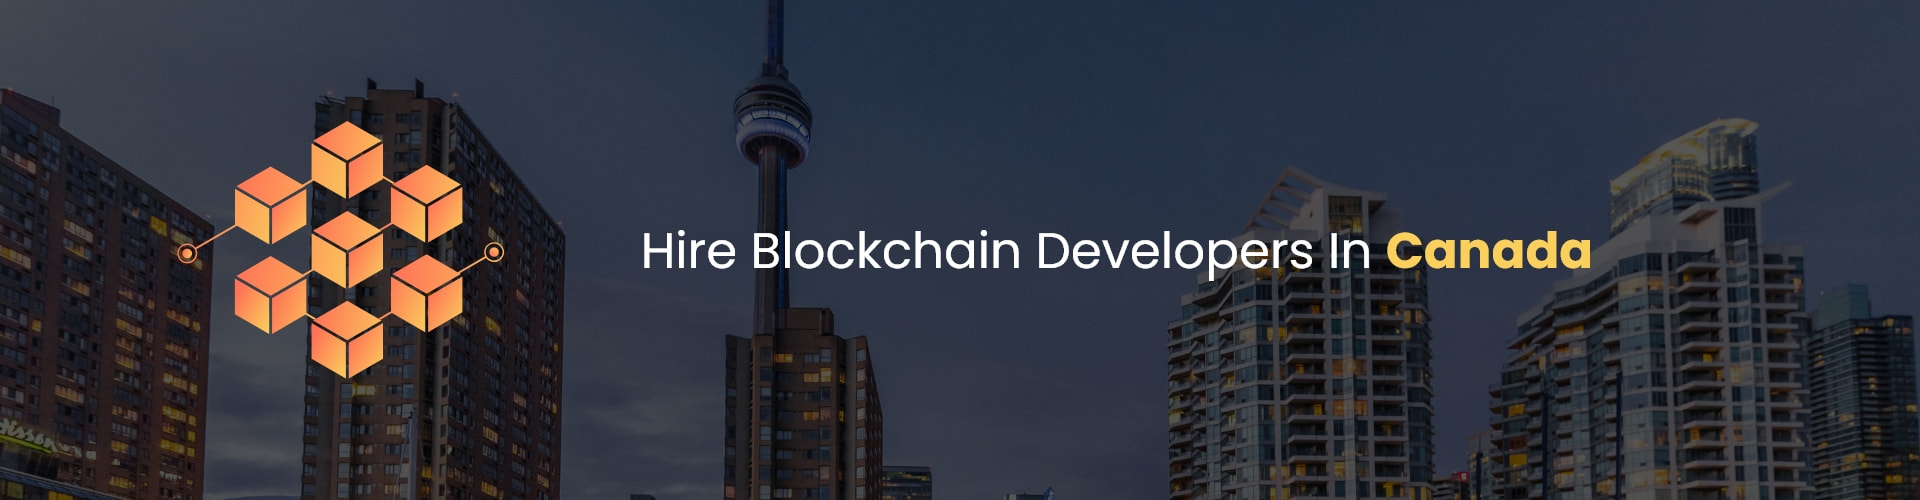 hire blockchain developers in canada